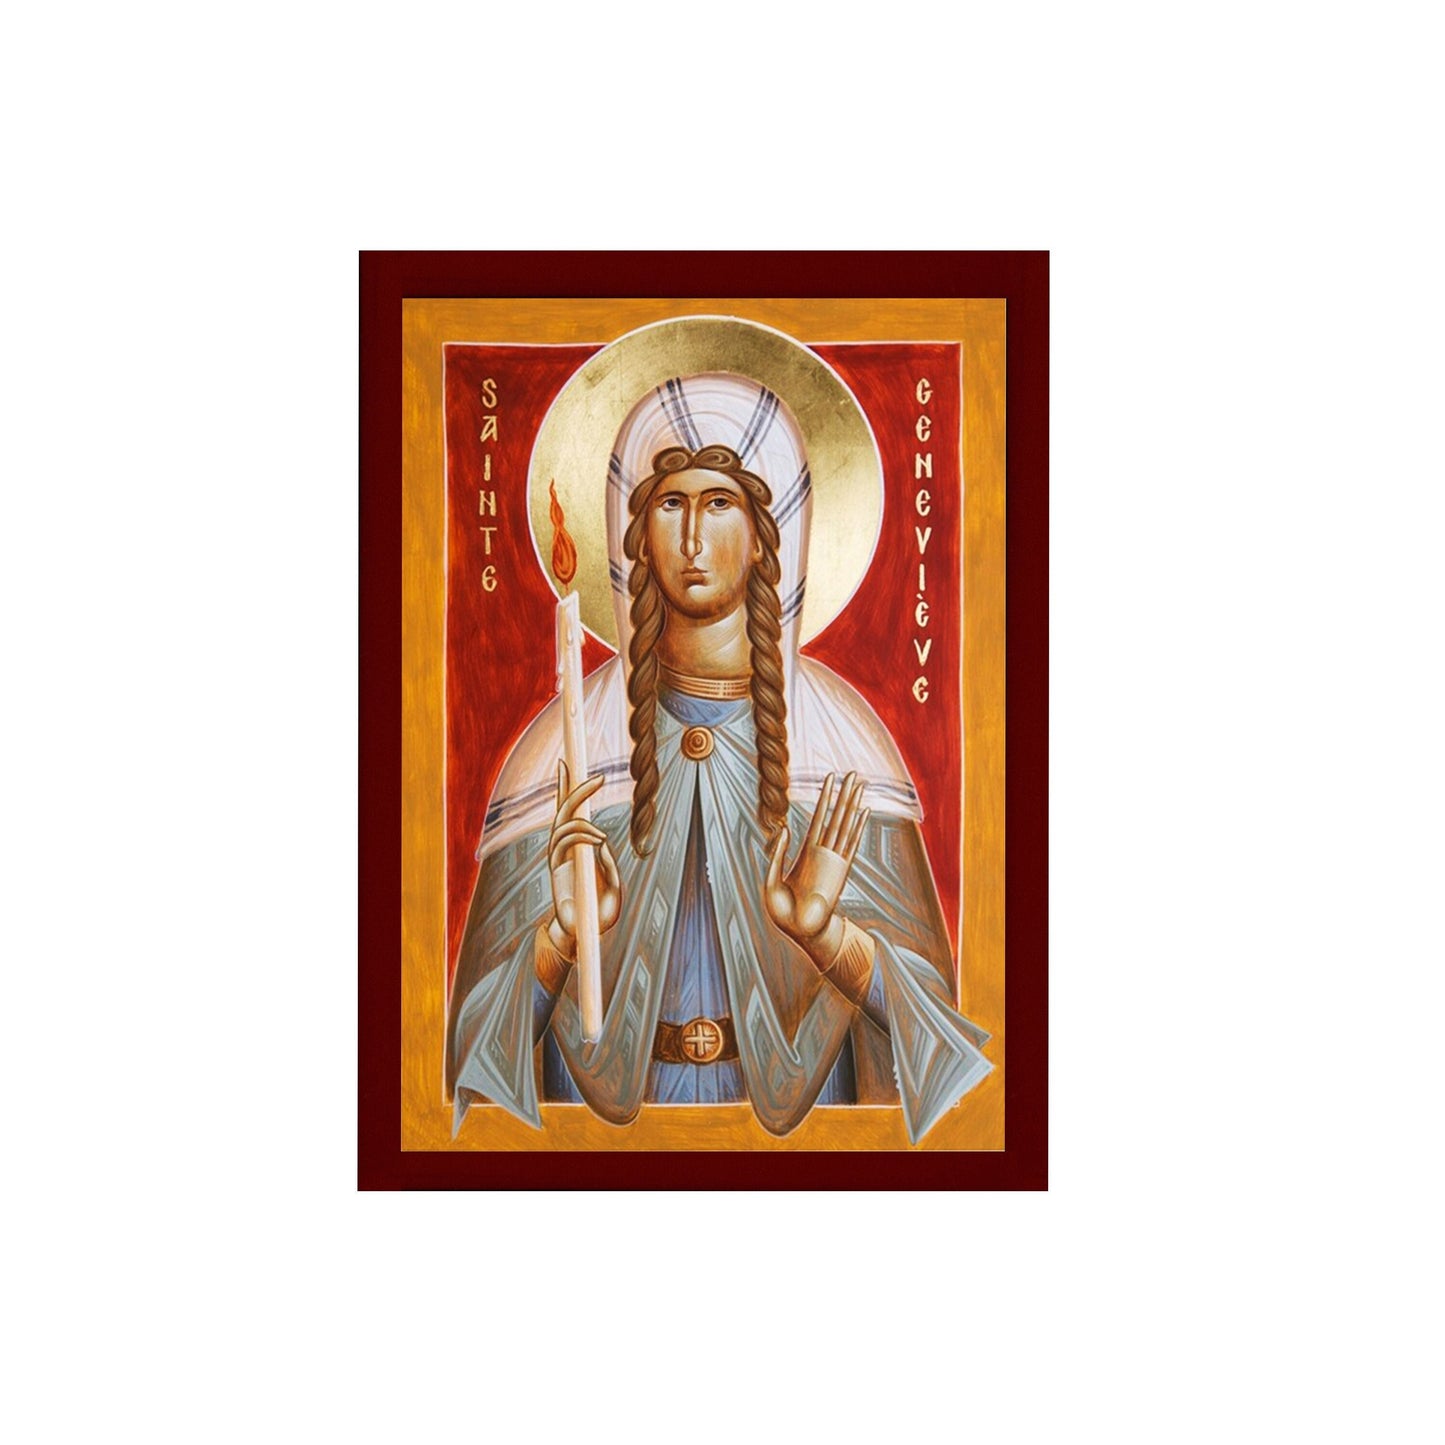 Saint Genevieve icon, Handmade Greek Orthodox Catholic icon of St Genevieve of Paris, Christian art wall hanging wood plaque, religious gift TheHolyArt